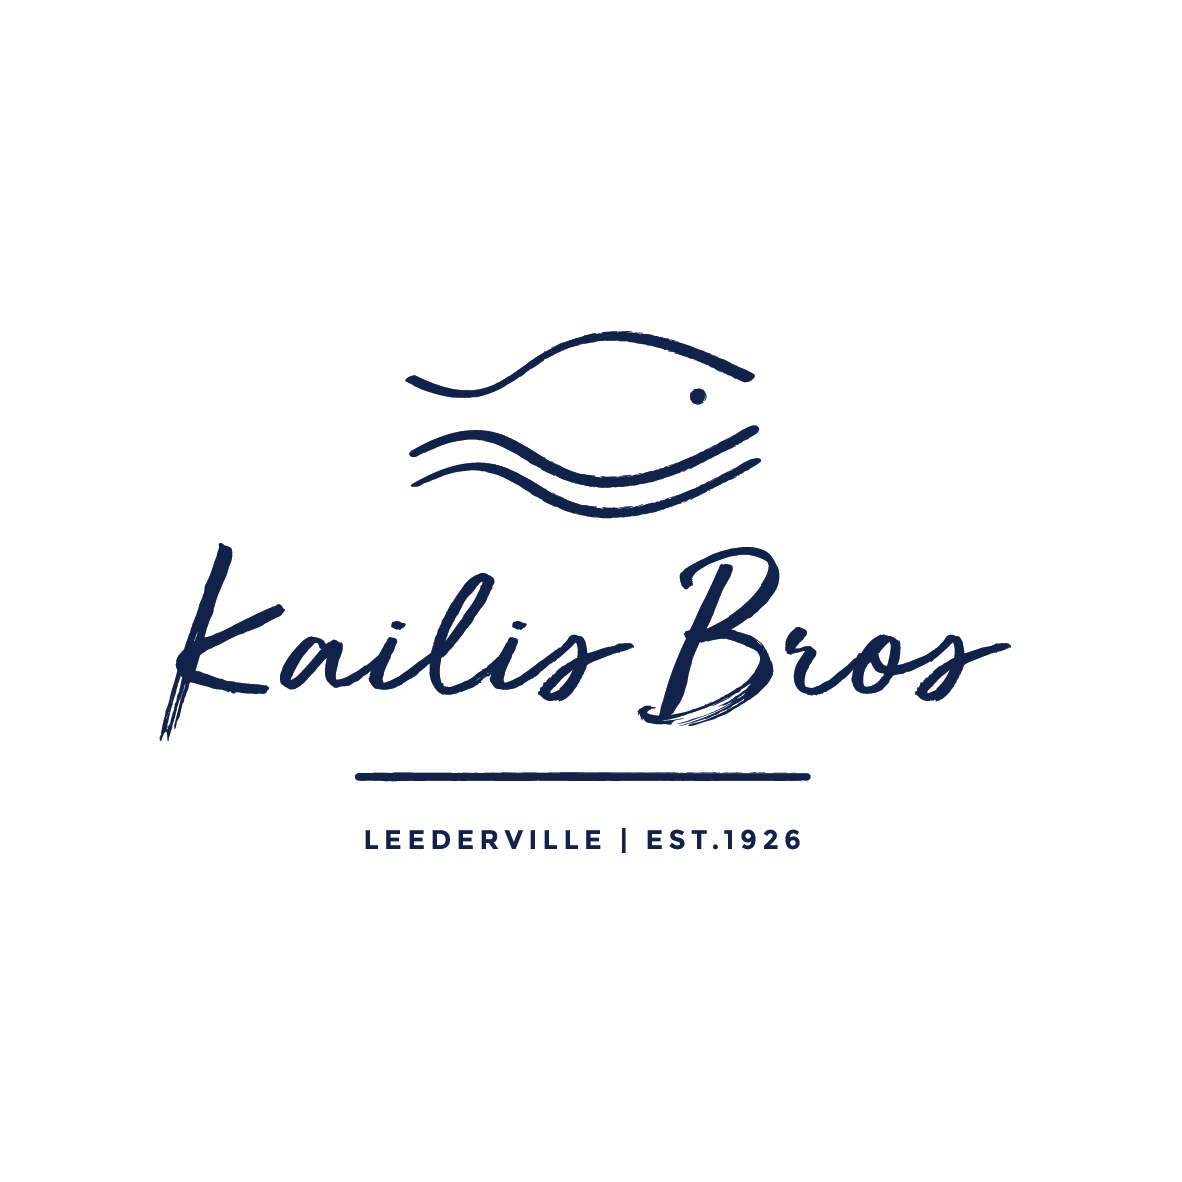 Kailis logo white background.jpg